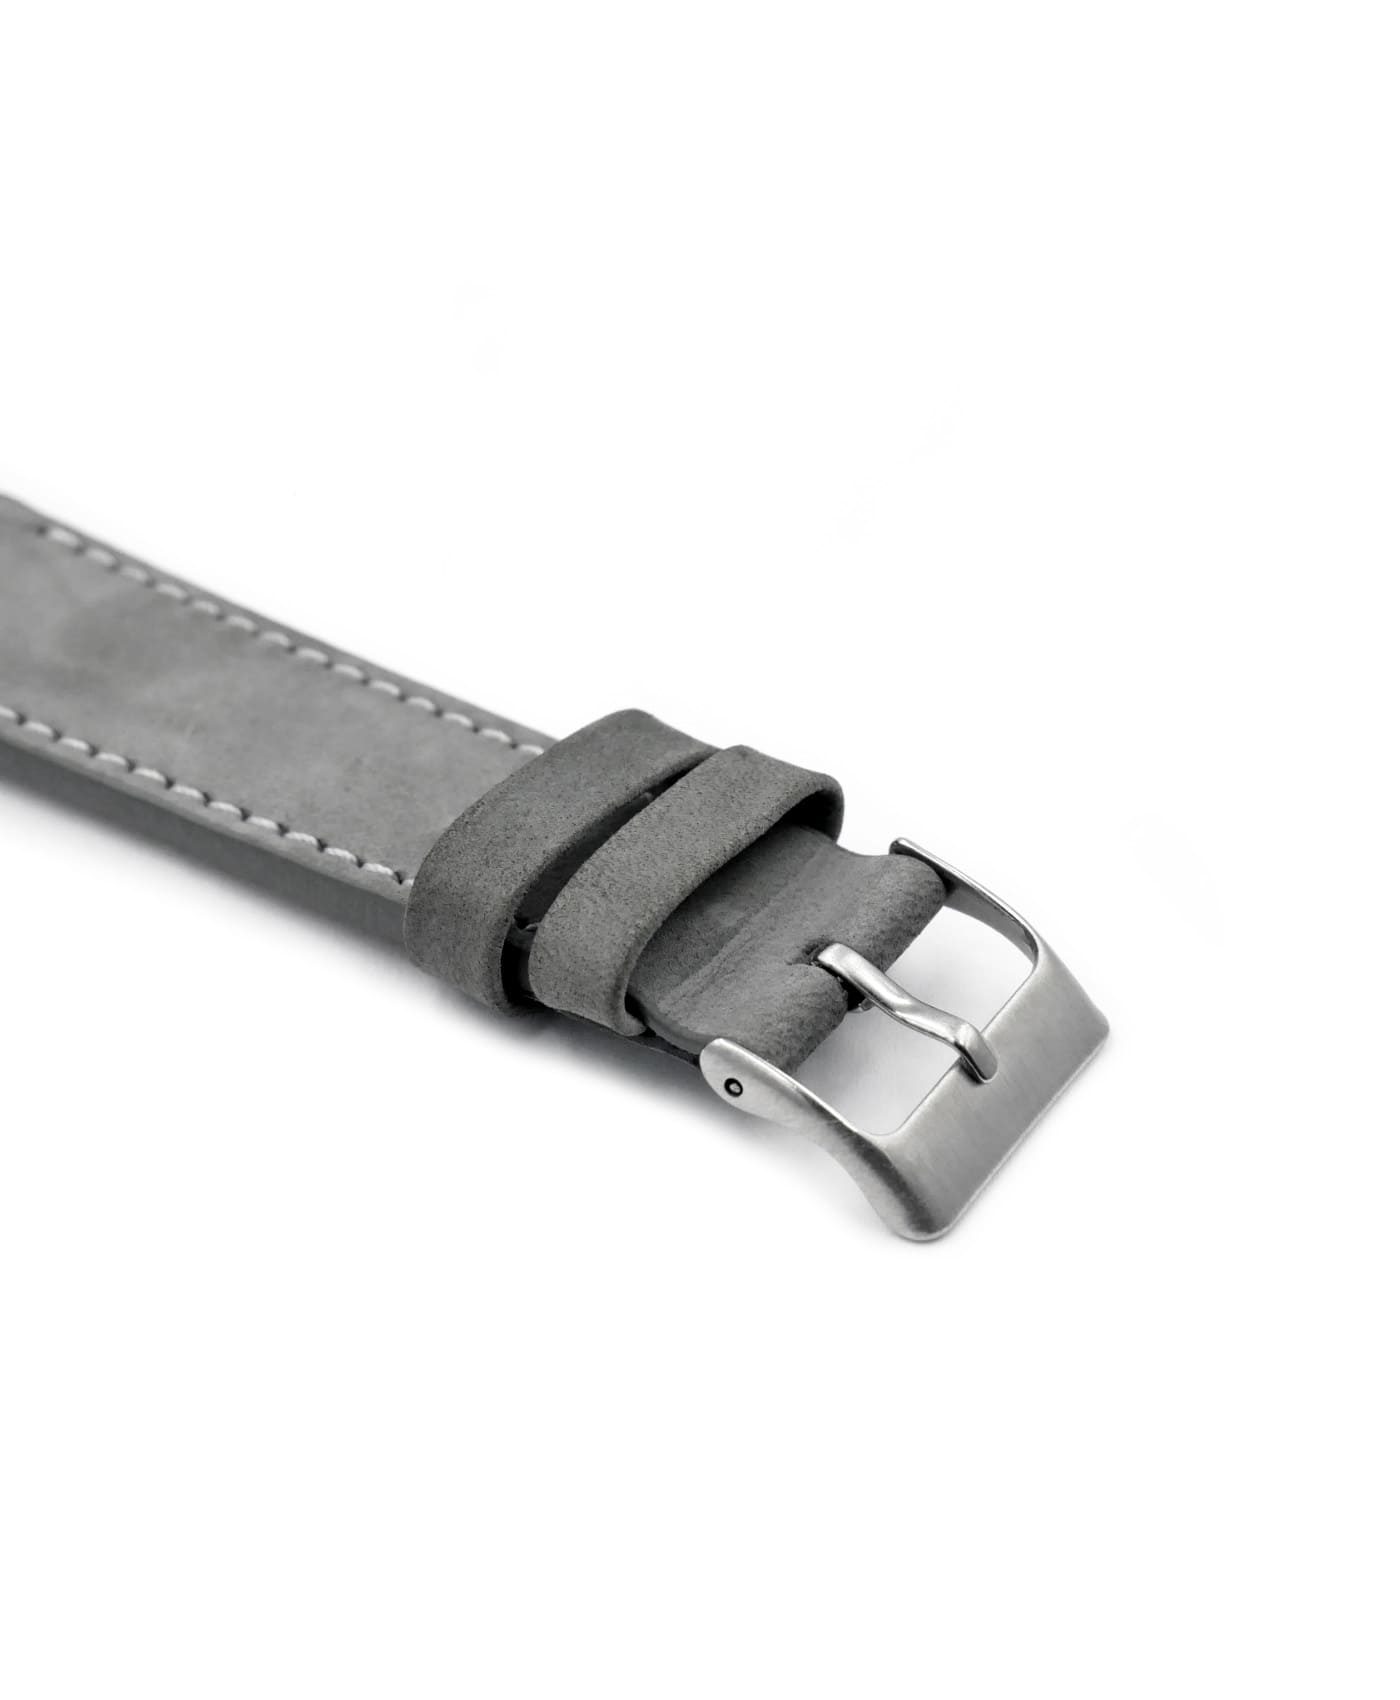 Pebro Premium Calfskin Watch Strap Grey No 582 buckle close up